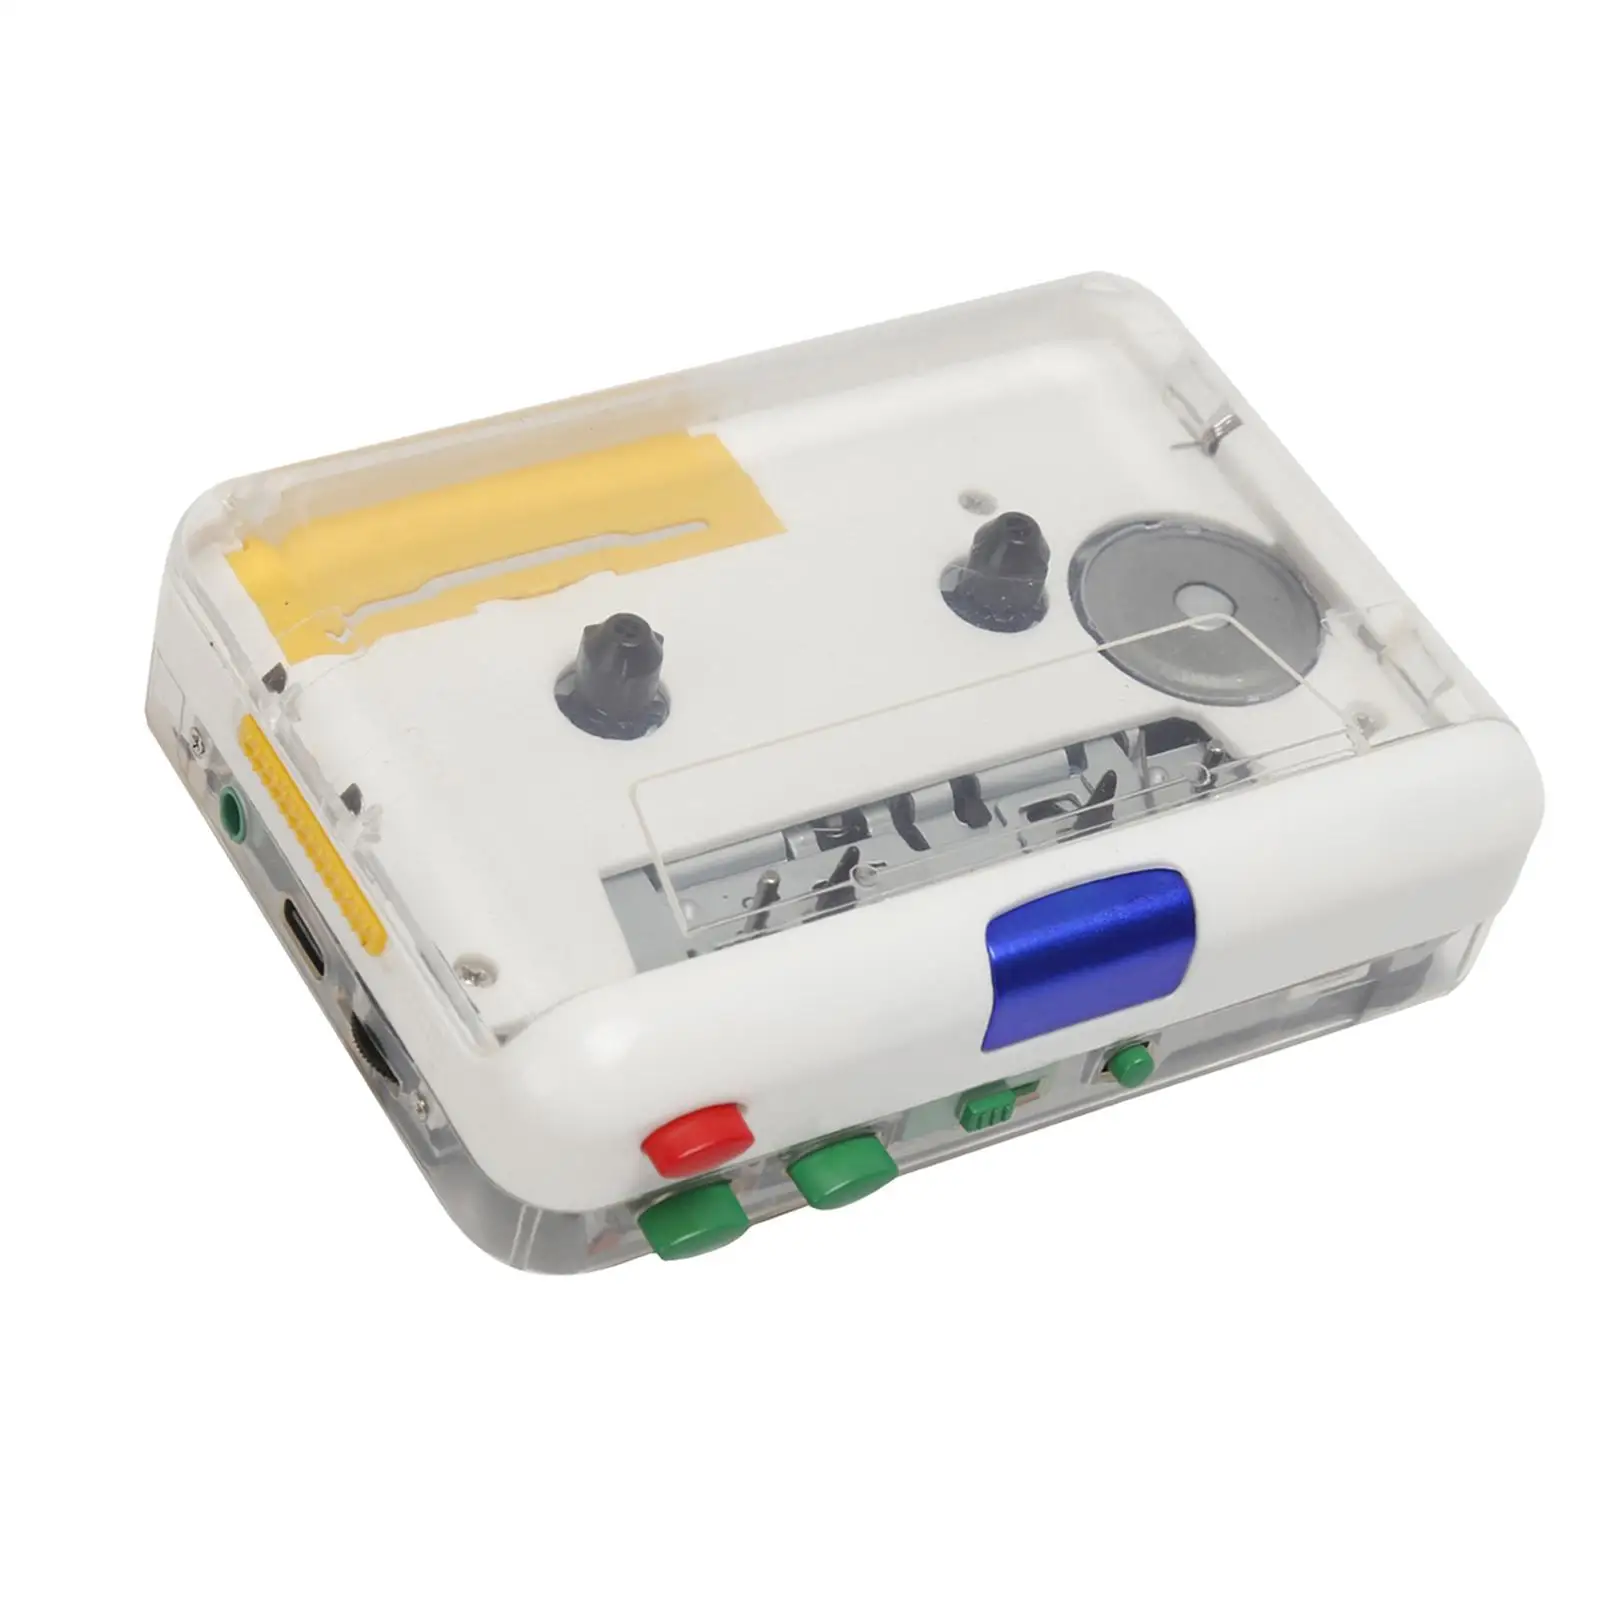 Portable Cassette Player 3.5mm Headphone Convert Tapes Output to Headphone/Speaker Bluetooth Transfer Cassette to MP3 Converter